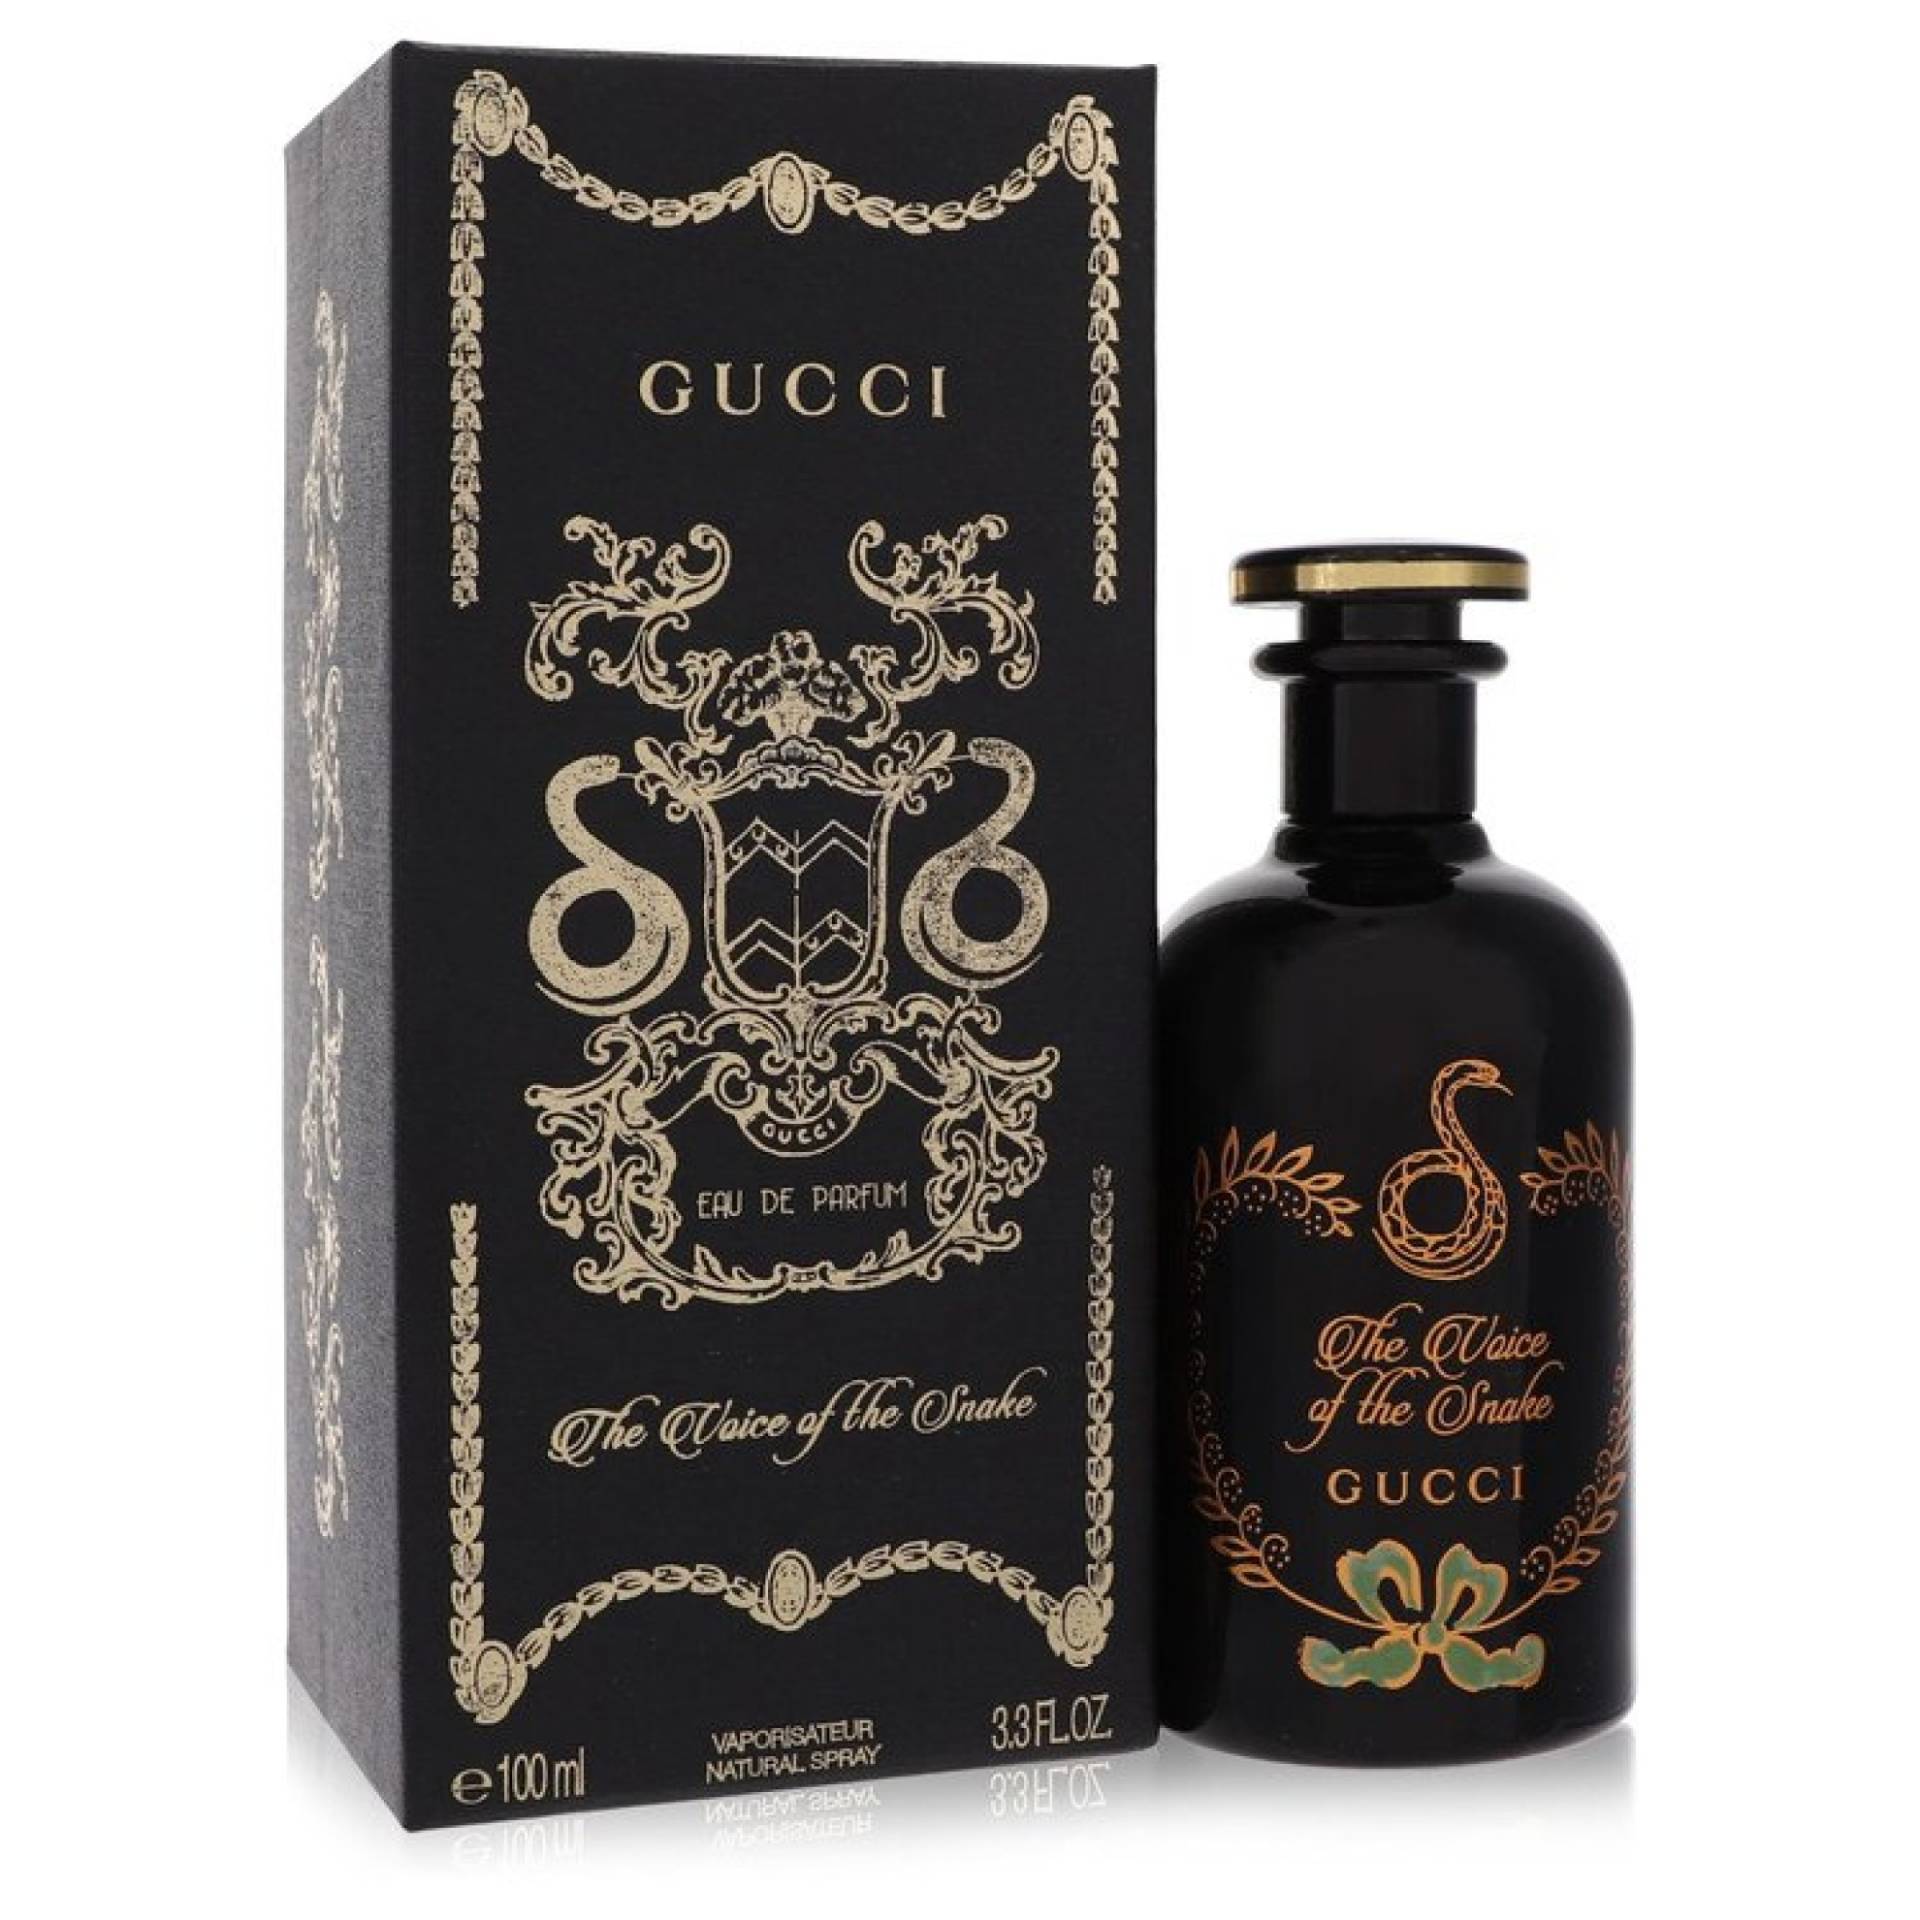 Gucci The Voice of the Snake Eau De Parfum Spray 100 ml von Gucci